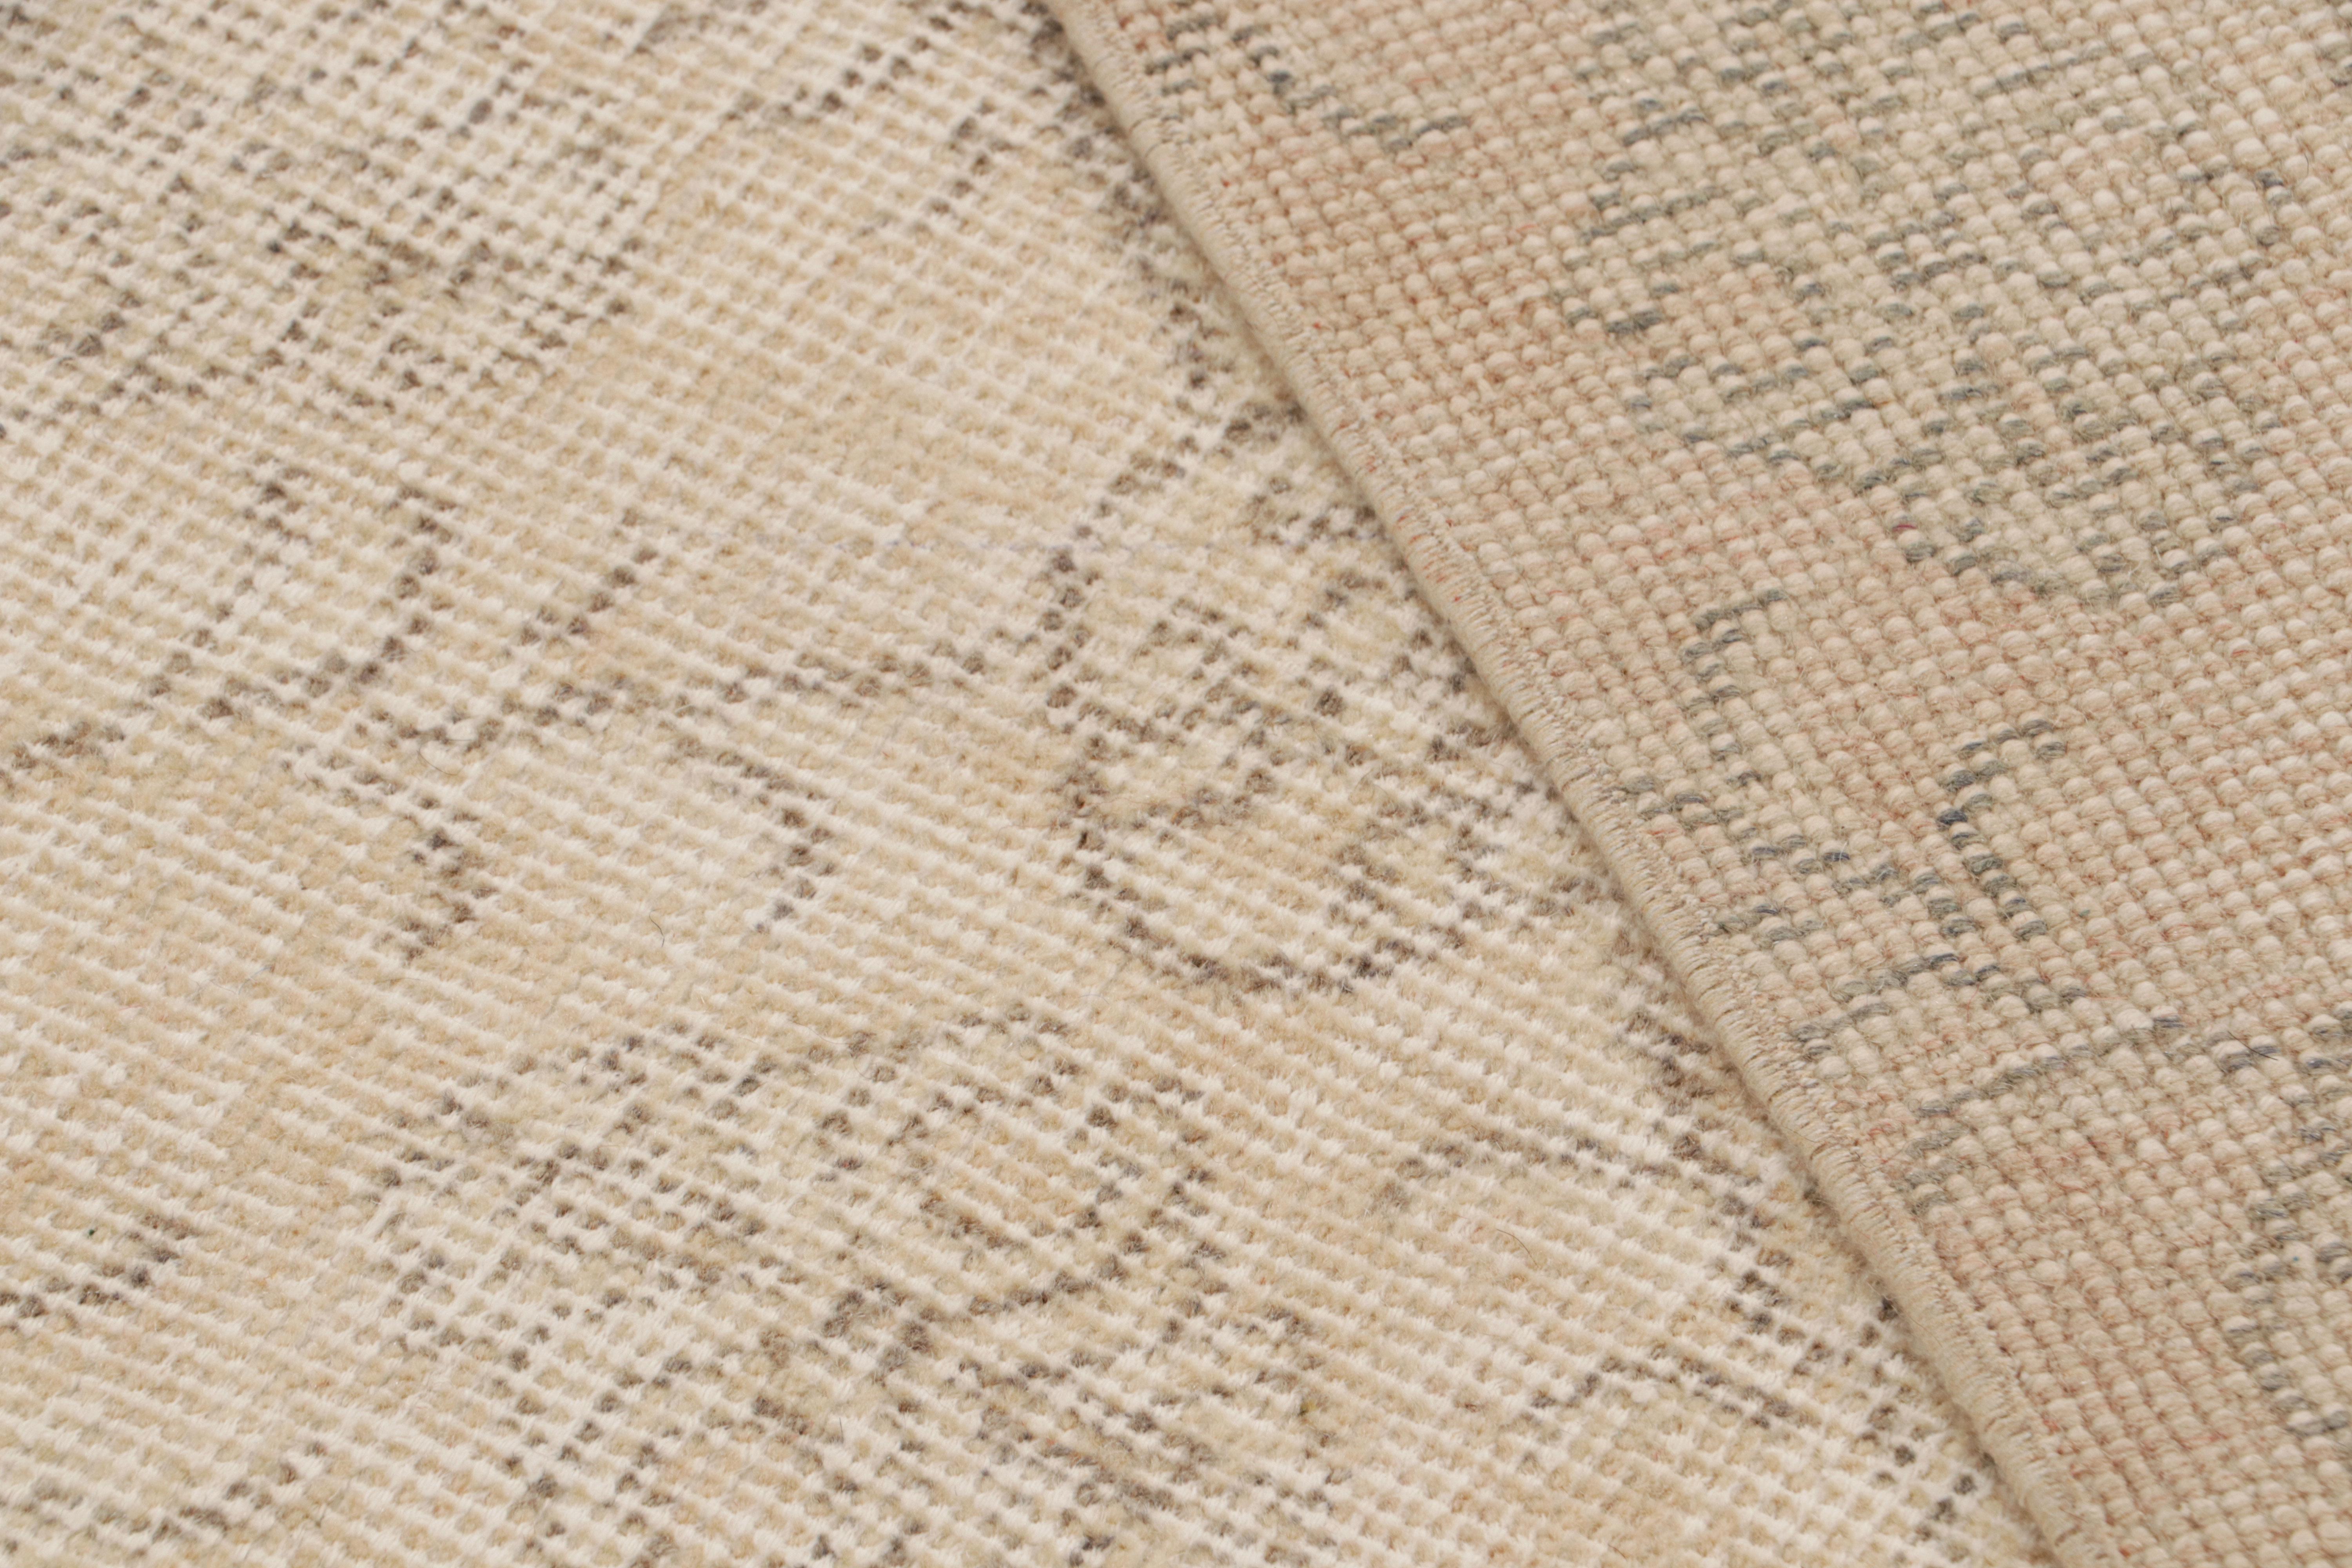 Wool Vintage Zeki Müren Rug with Beige-Brown Geometric Patterns, from Rug & Kilim For Sale